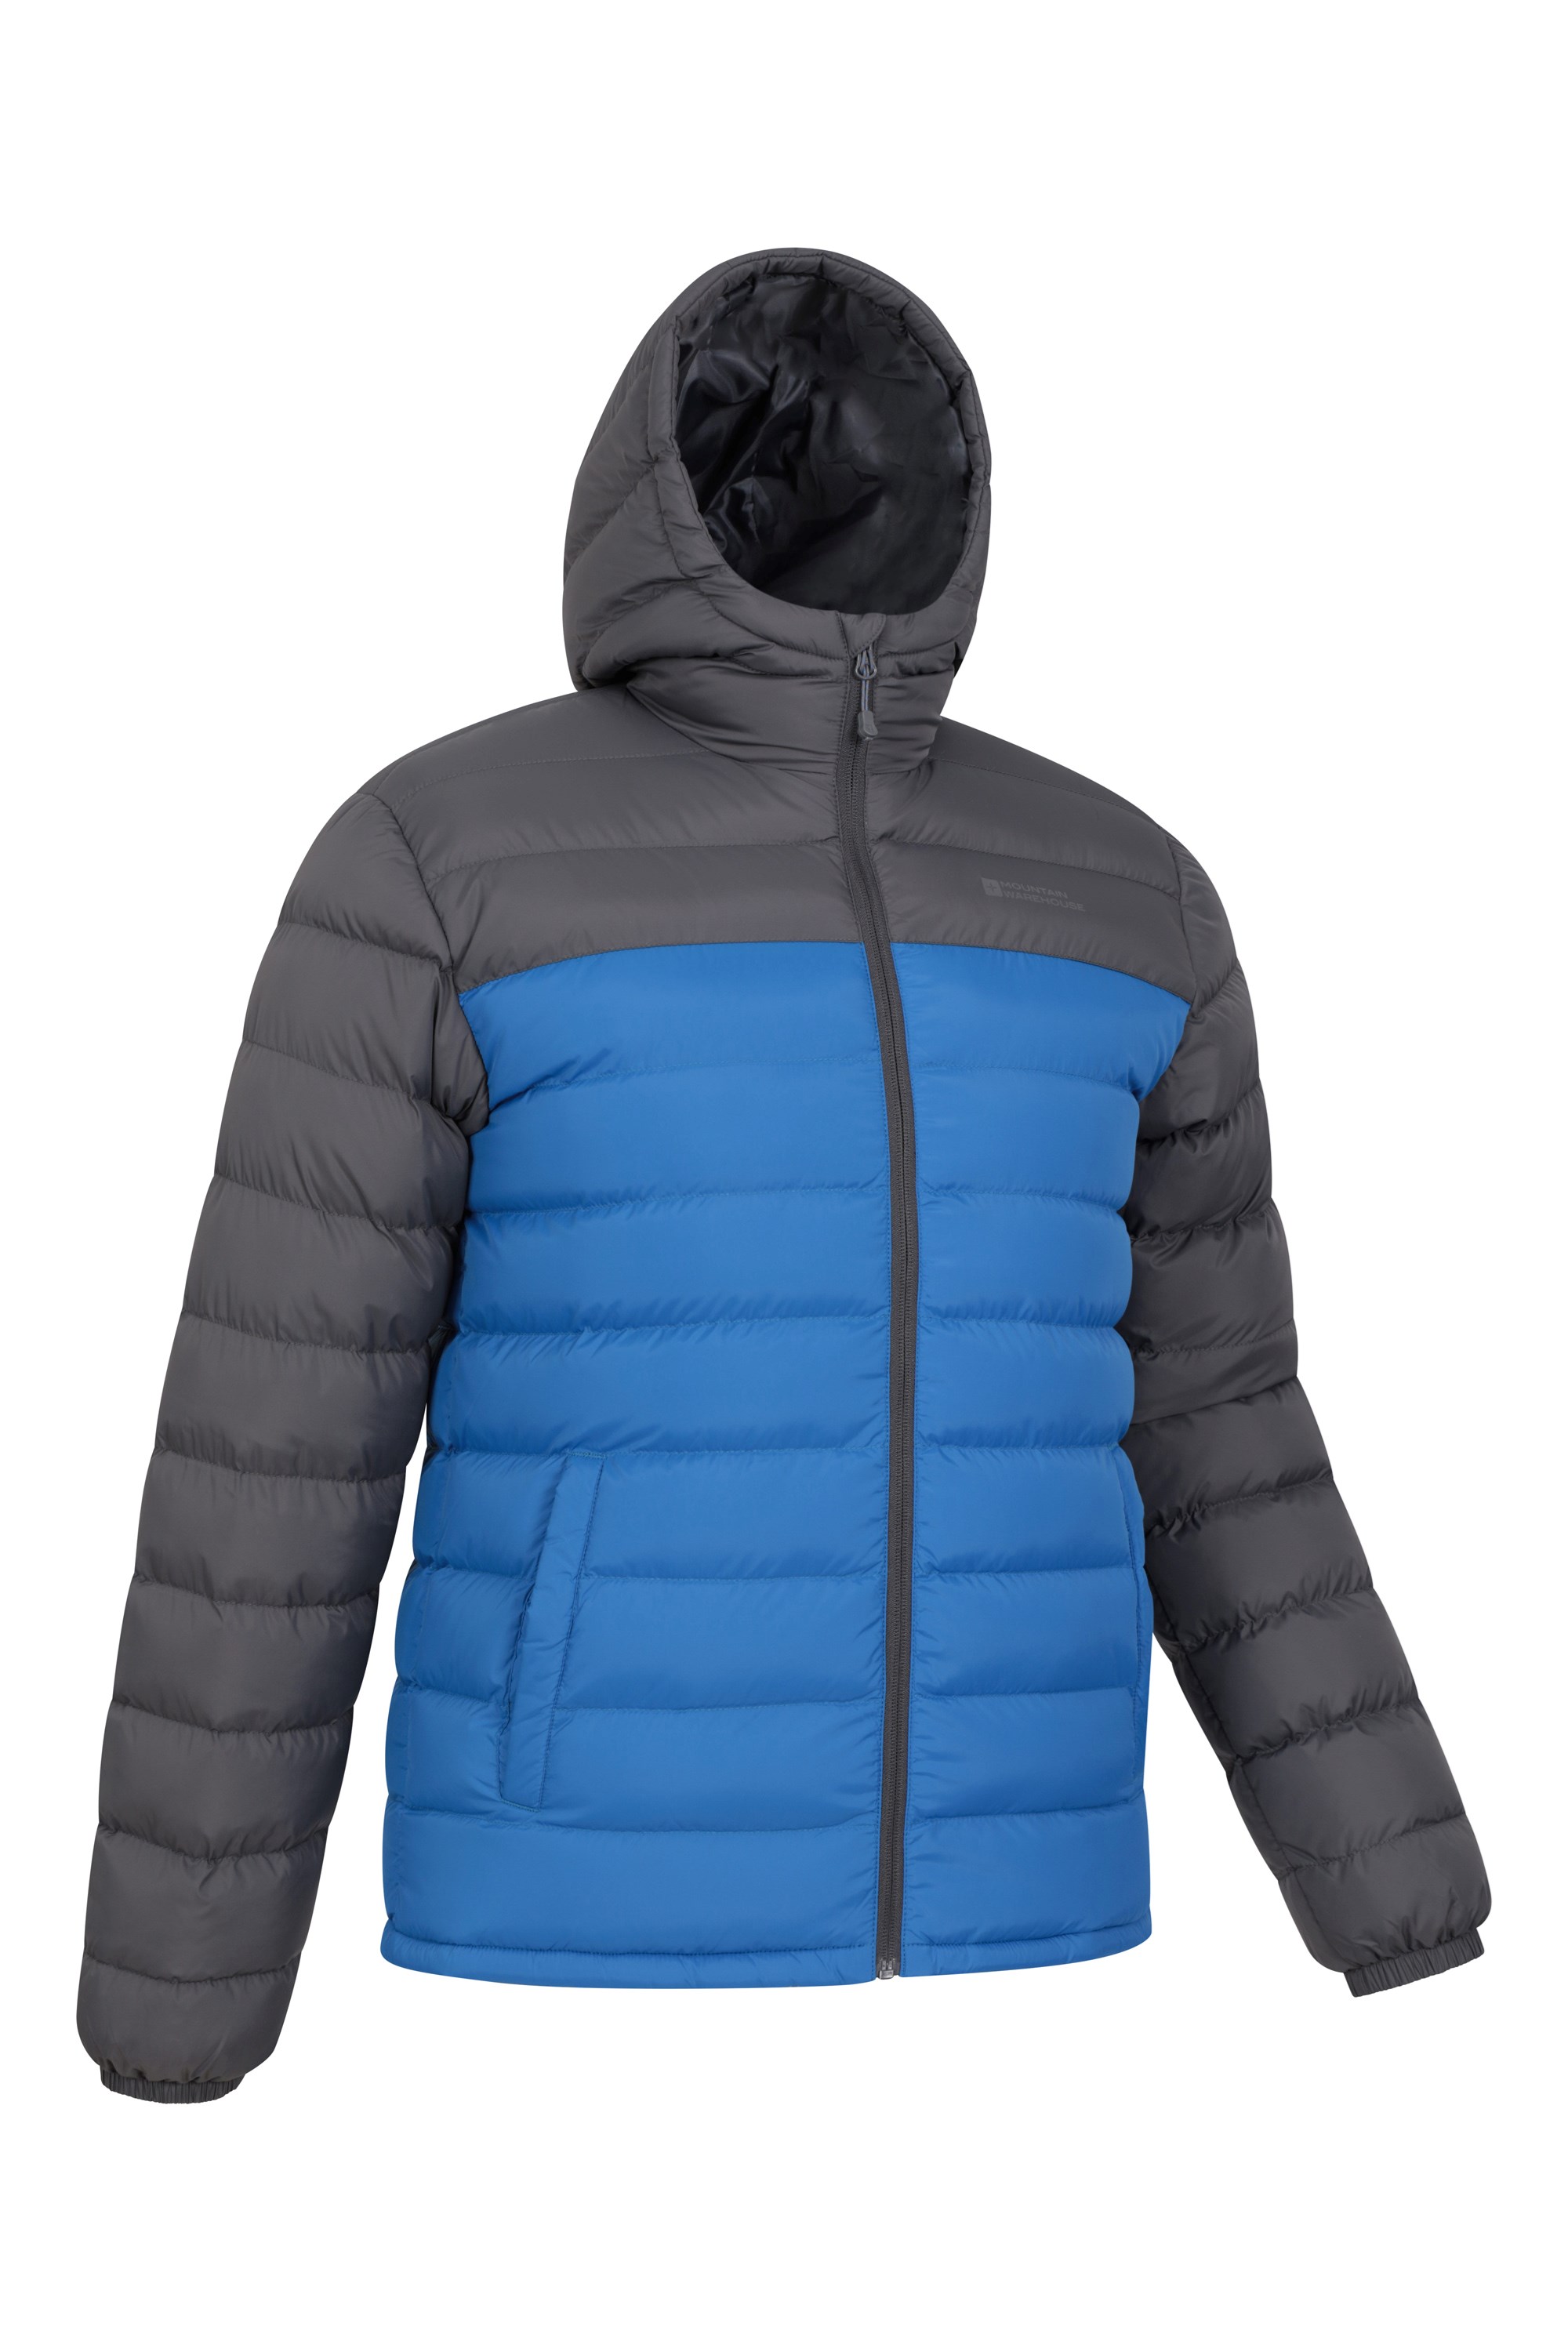 Mountain Warehouse Seasons Mens Insulated Jacket - Black | Size XXS